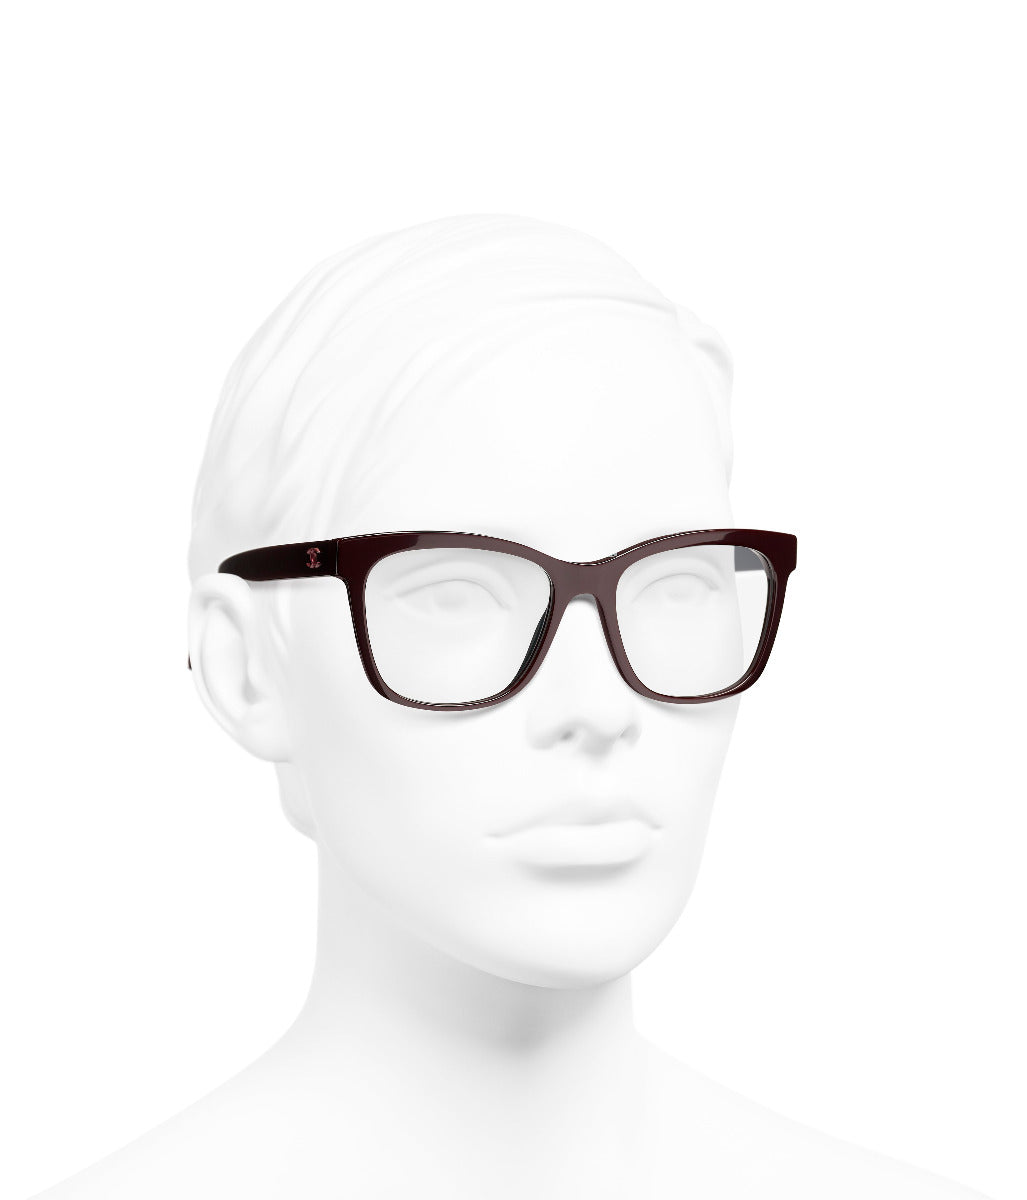 Chanel - Square Eyeglasses - Brown Tortoise Grey - Chanel Eyewear